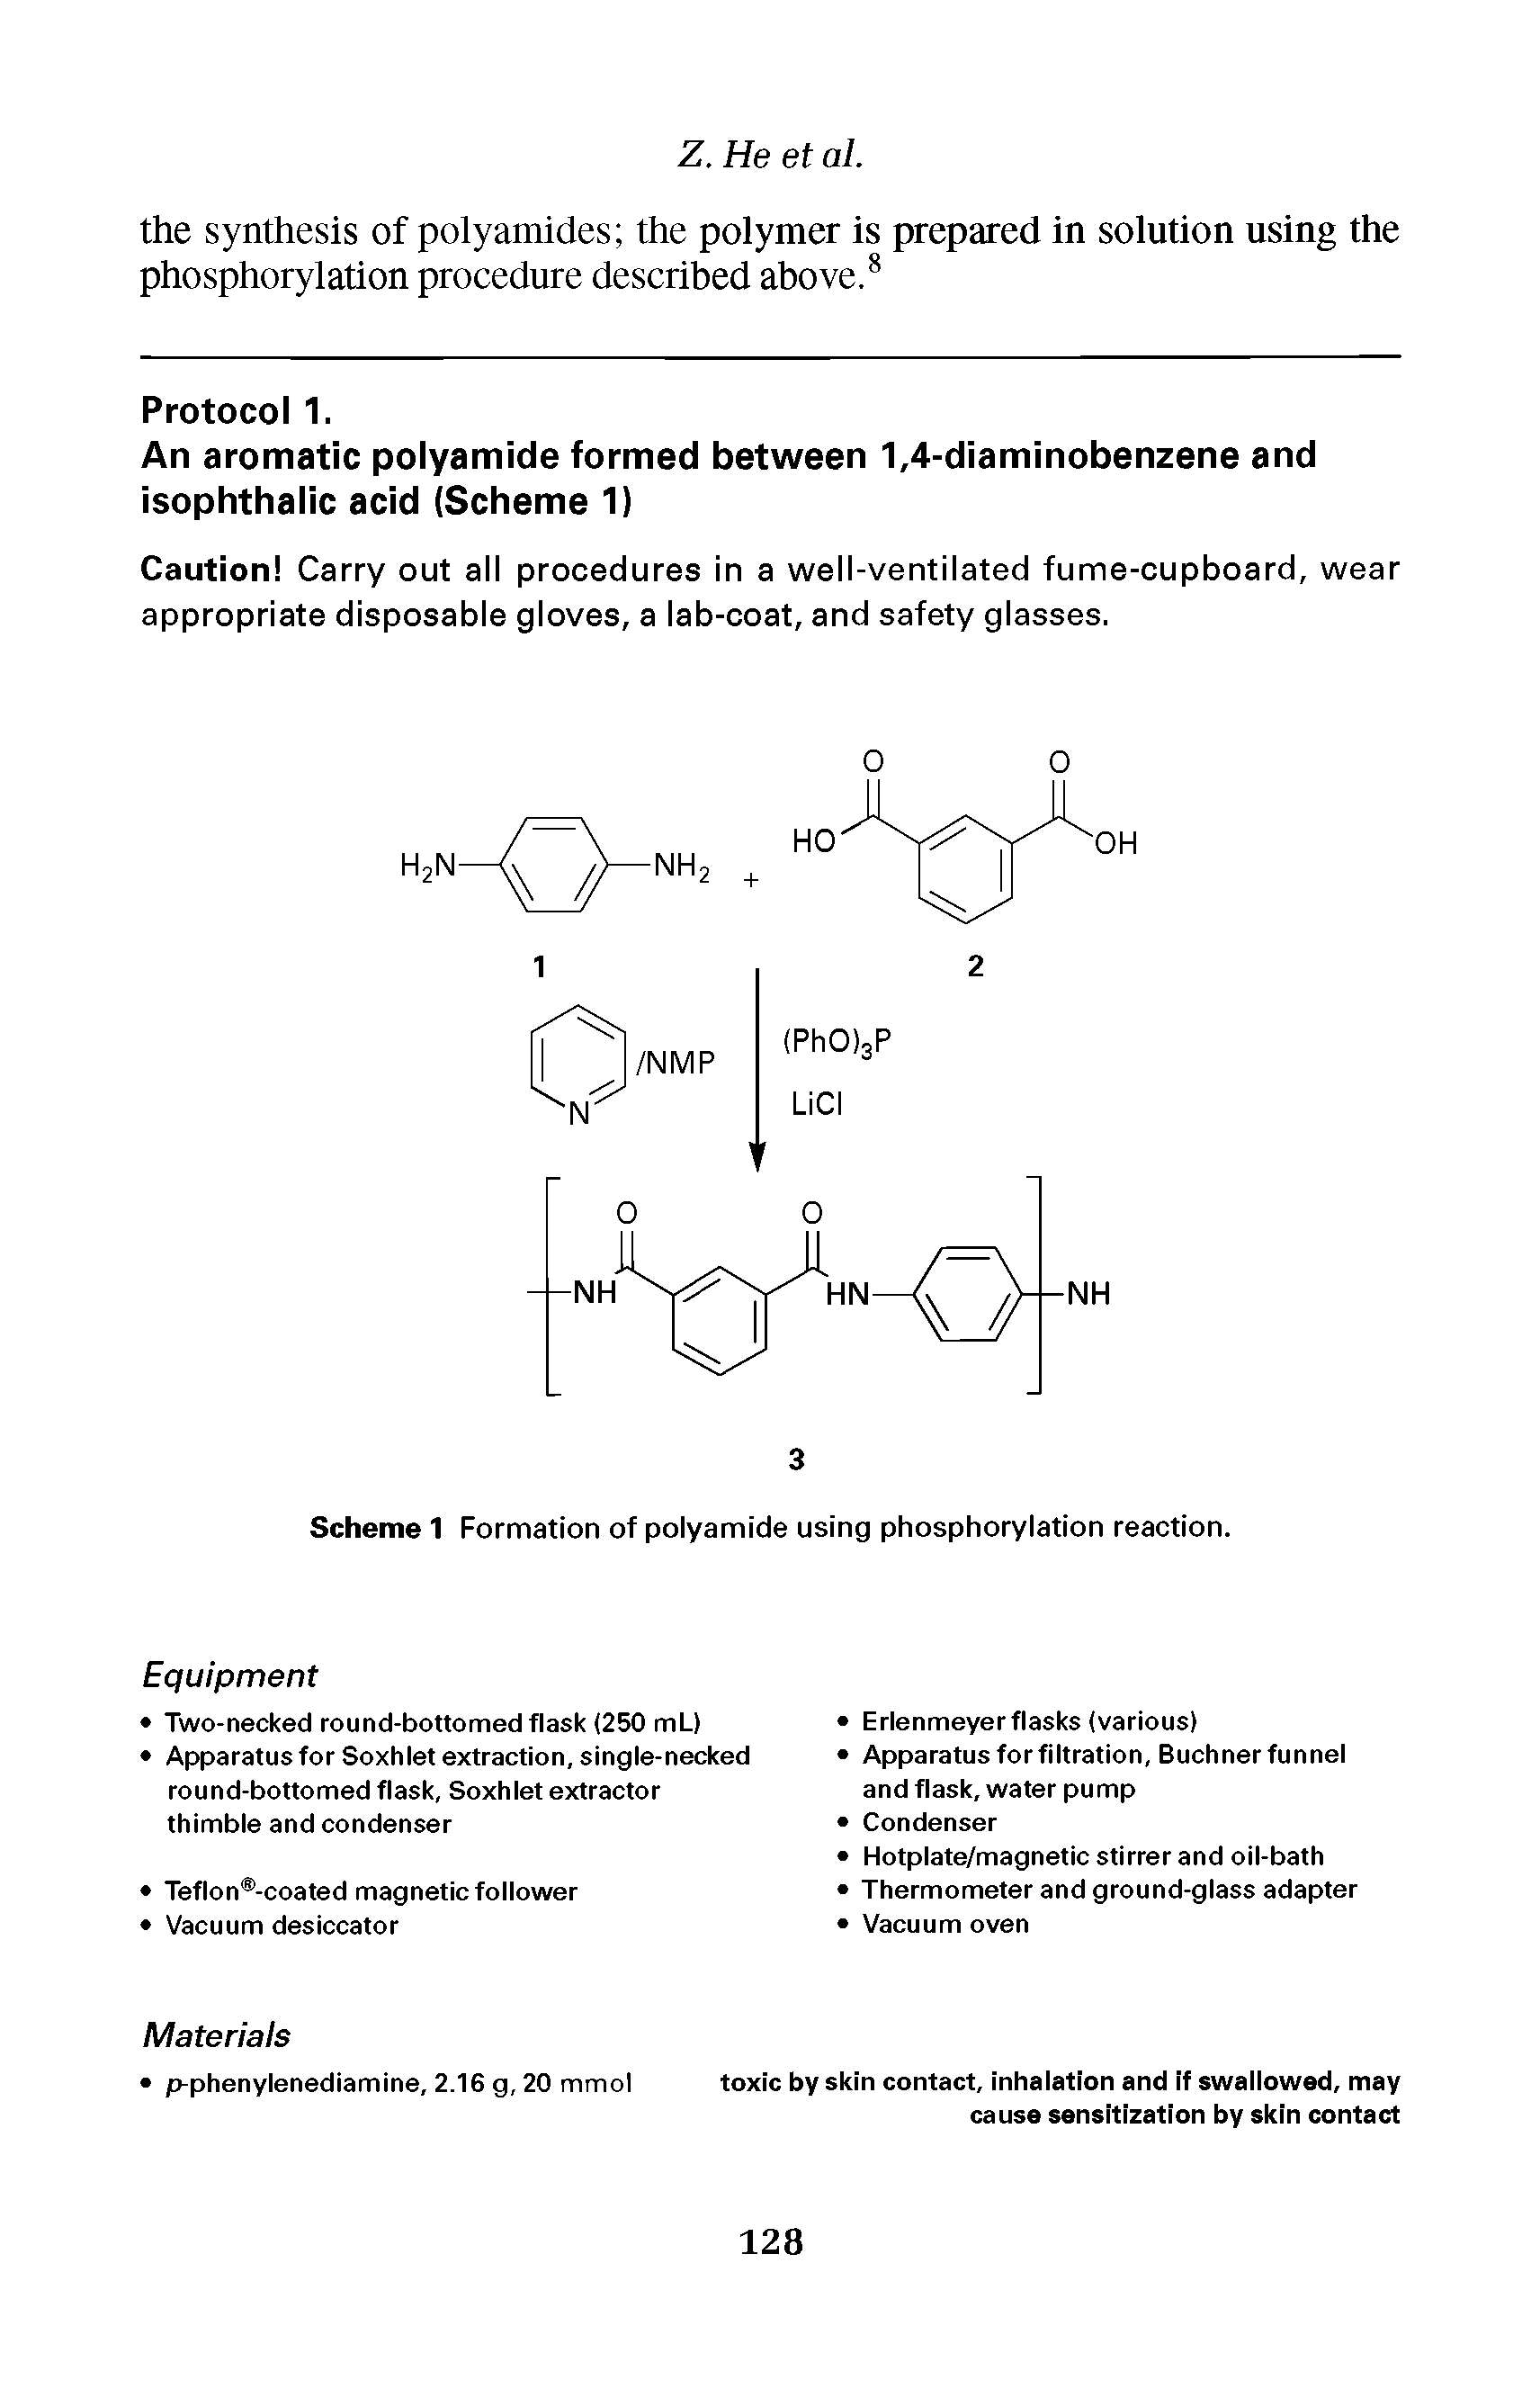 Scheme 1 Formation of polyamide using phosphorylation reaction.